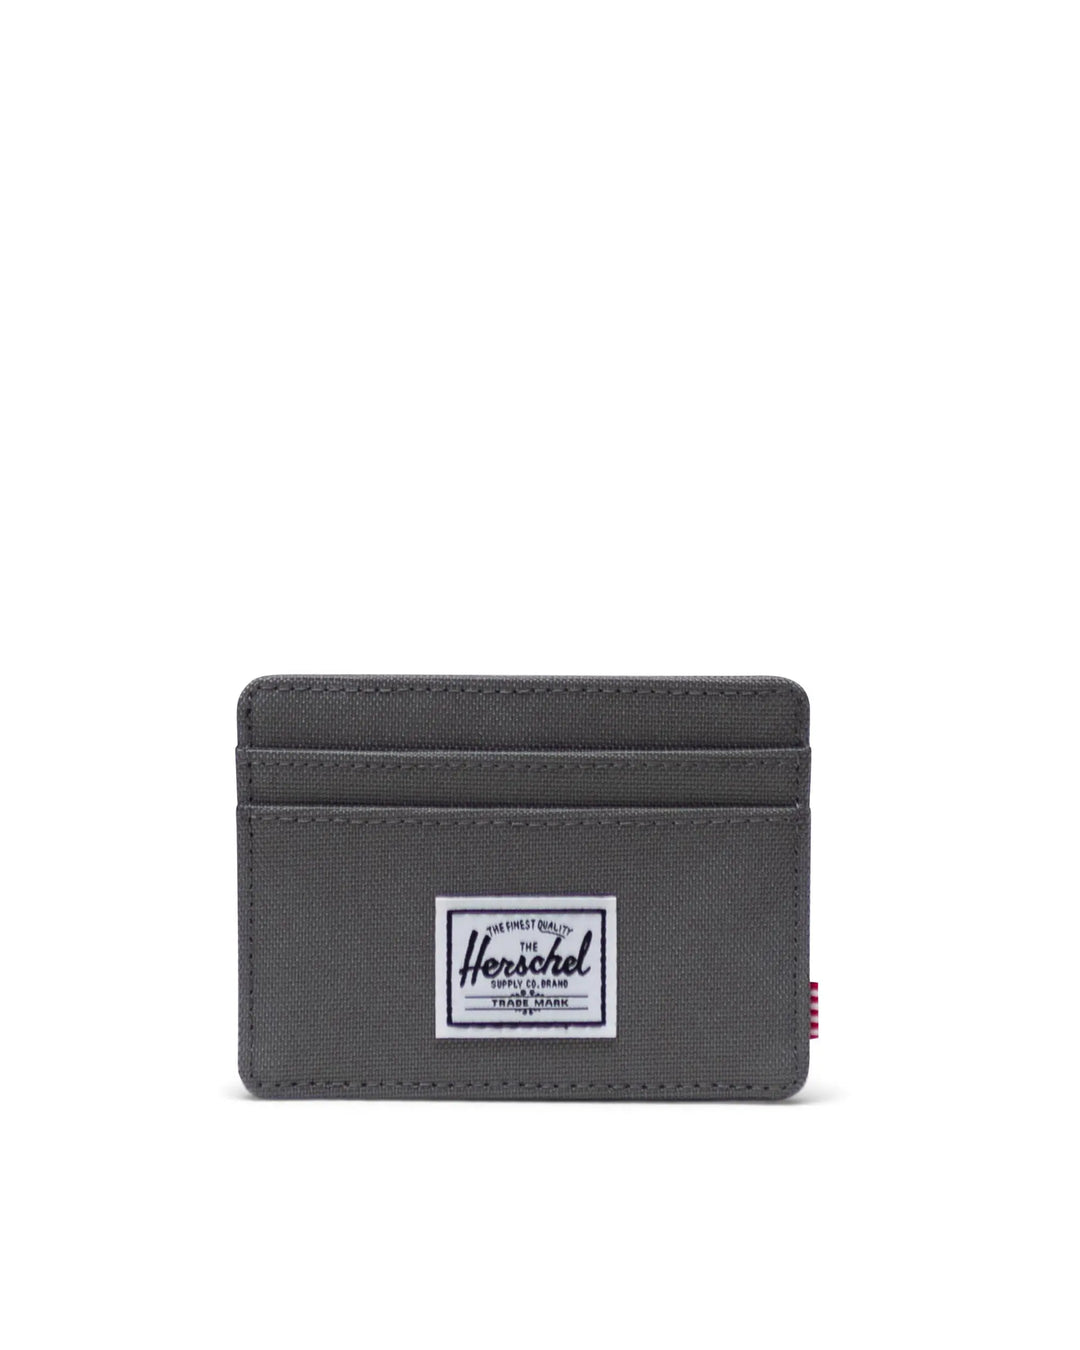 Men's Herschel Supply Co. Wallets & Card Cases